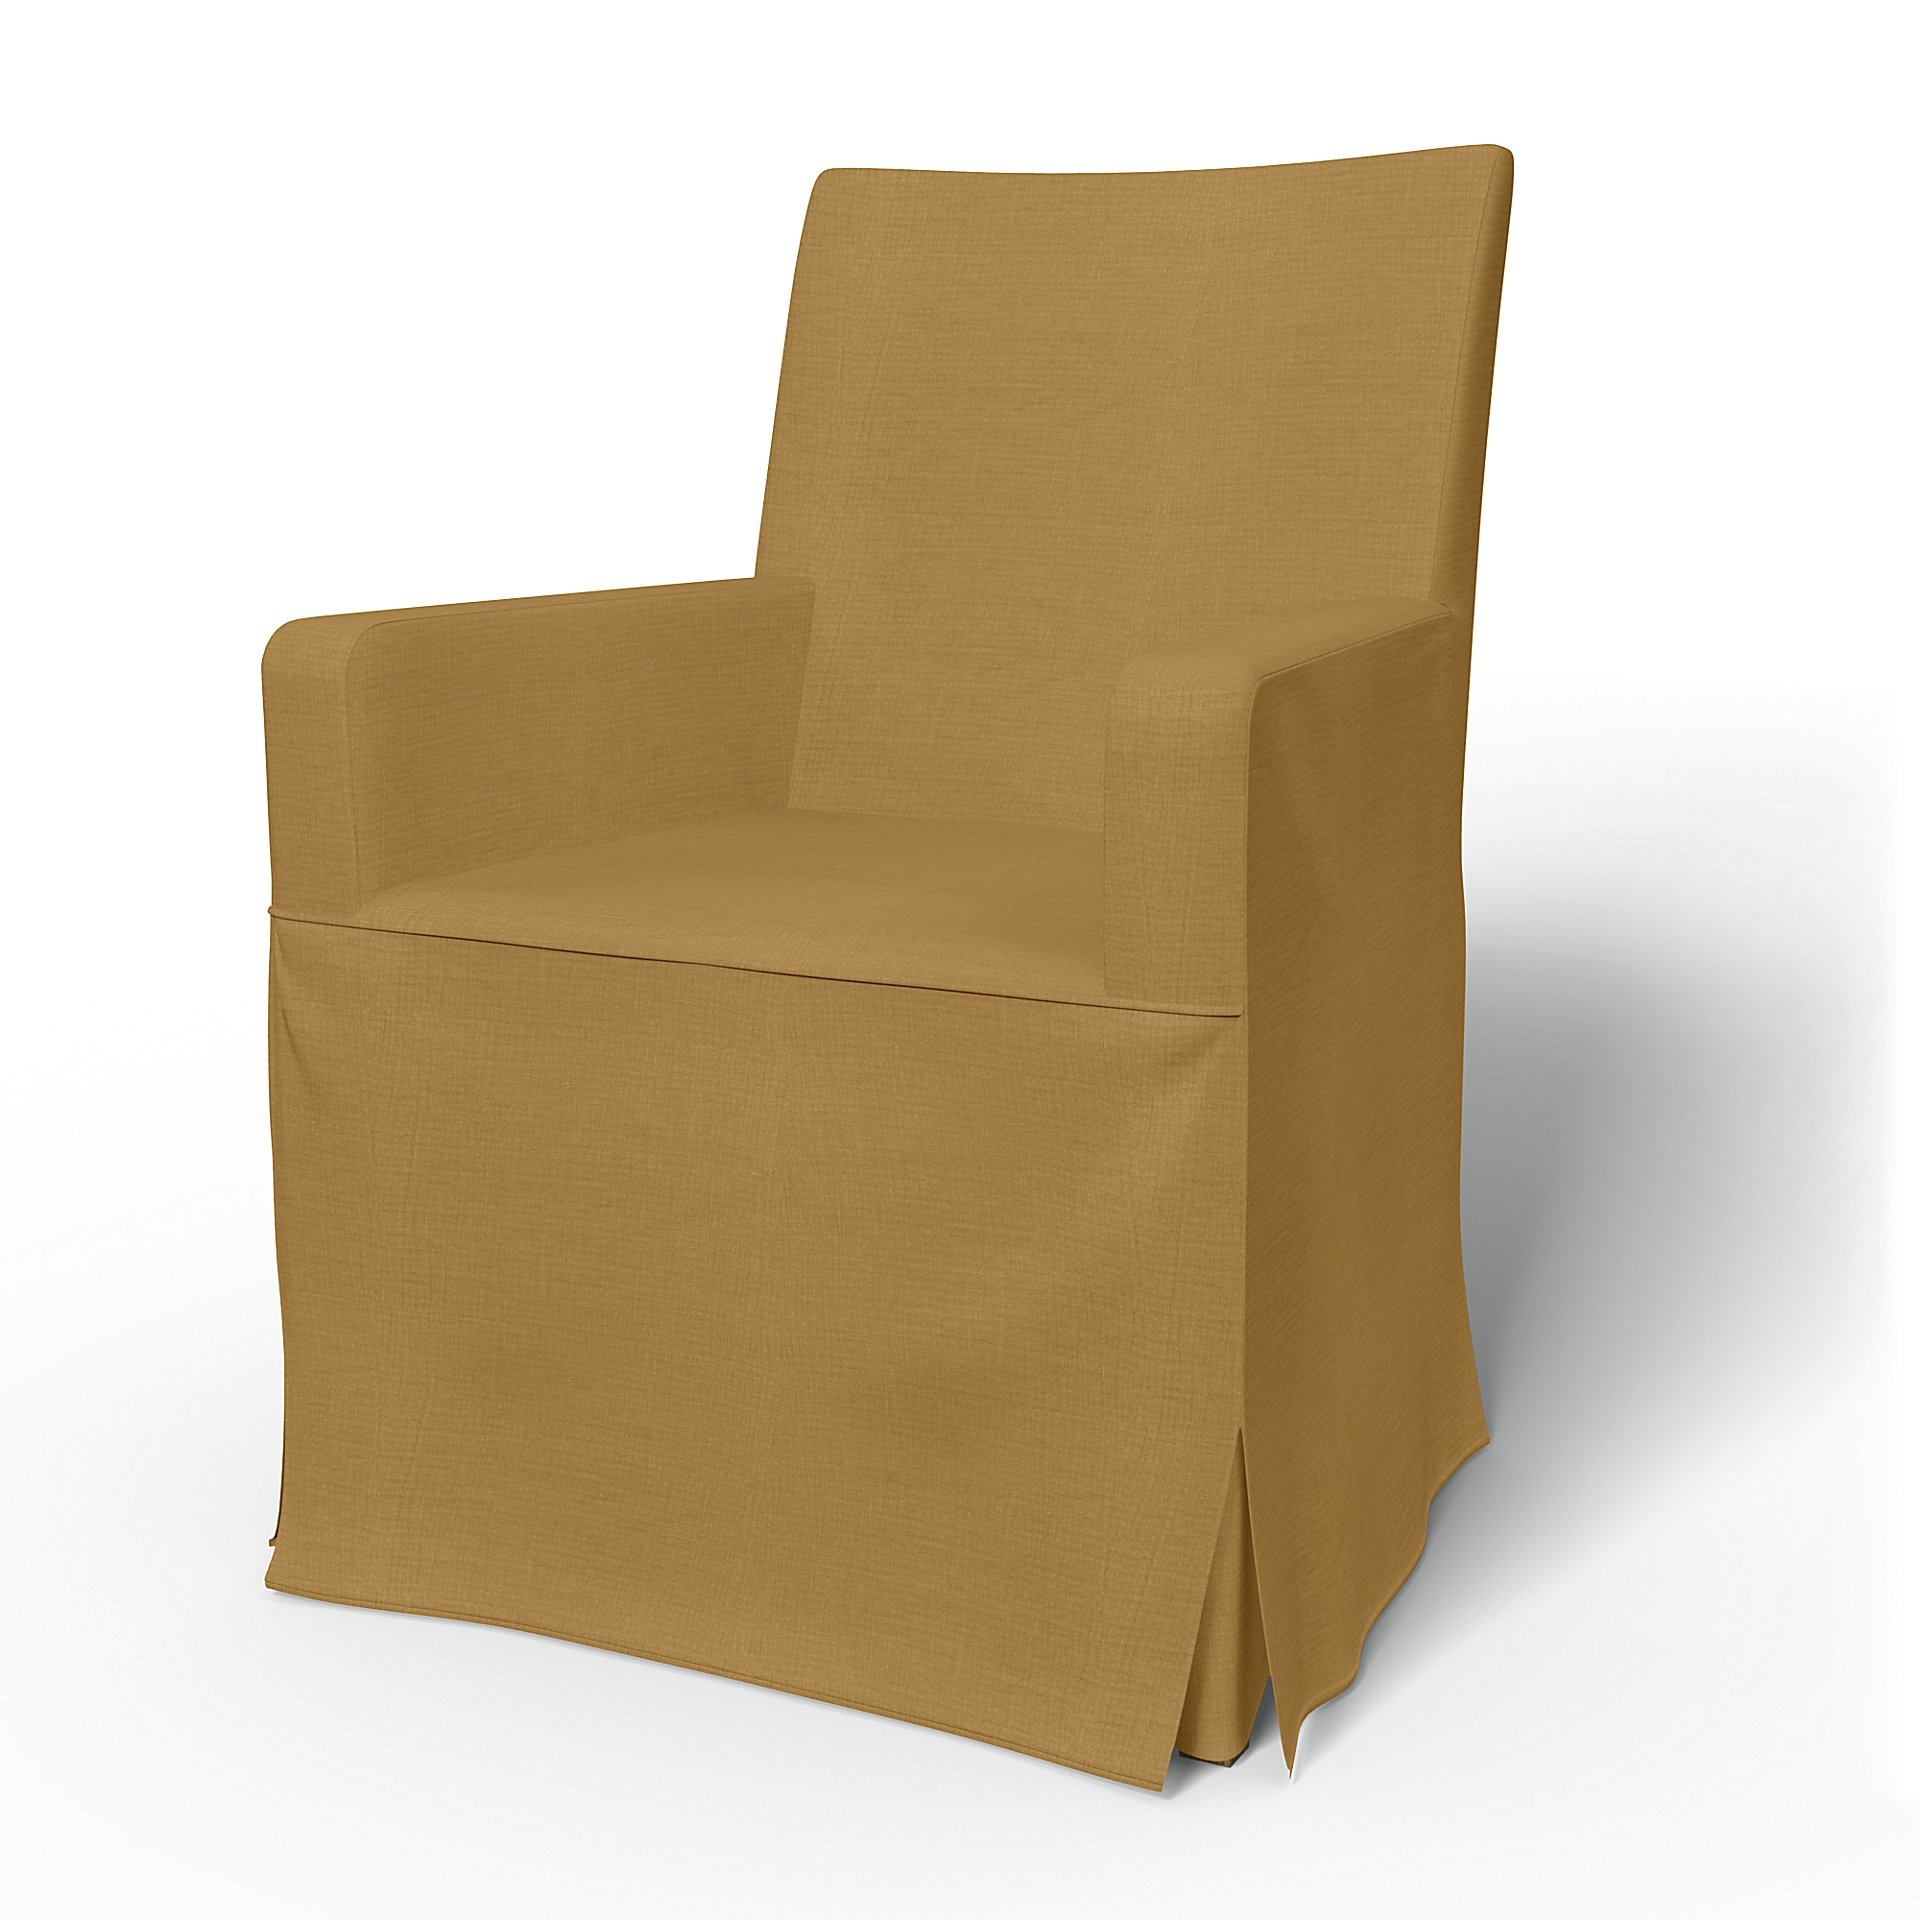 IKEA - Henriksdal, Chair cover w/ armrests, long skirt box pleat, Dusty Yellow, Linen - Bemz